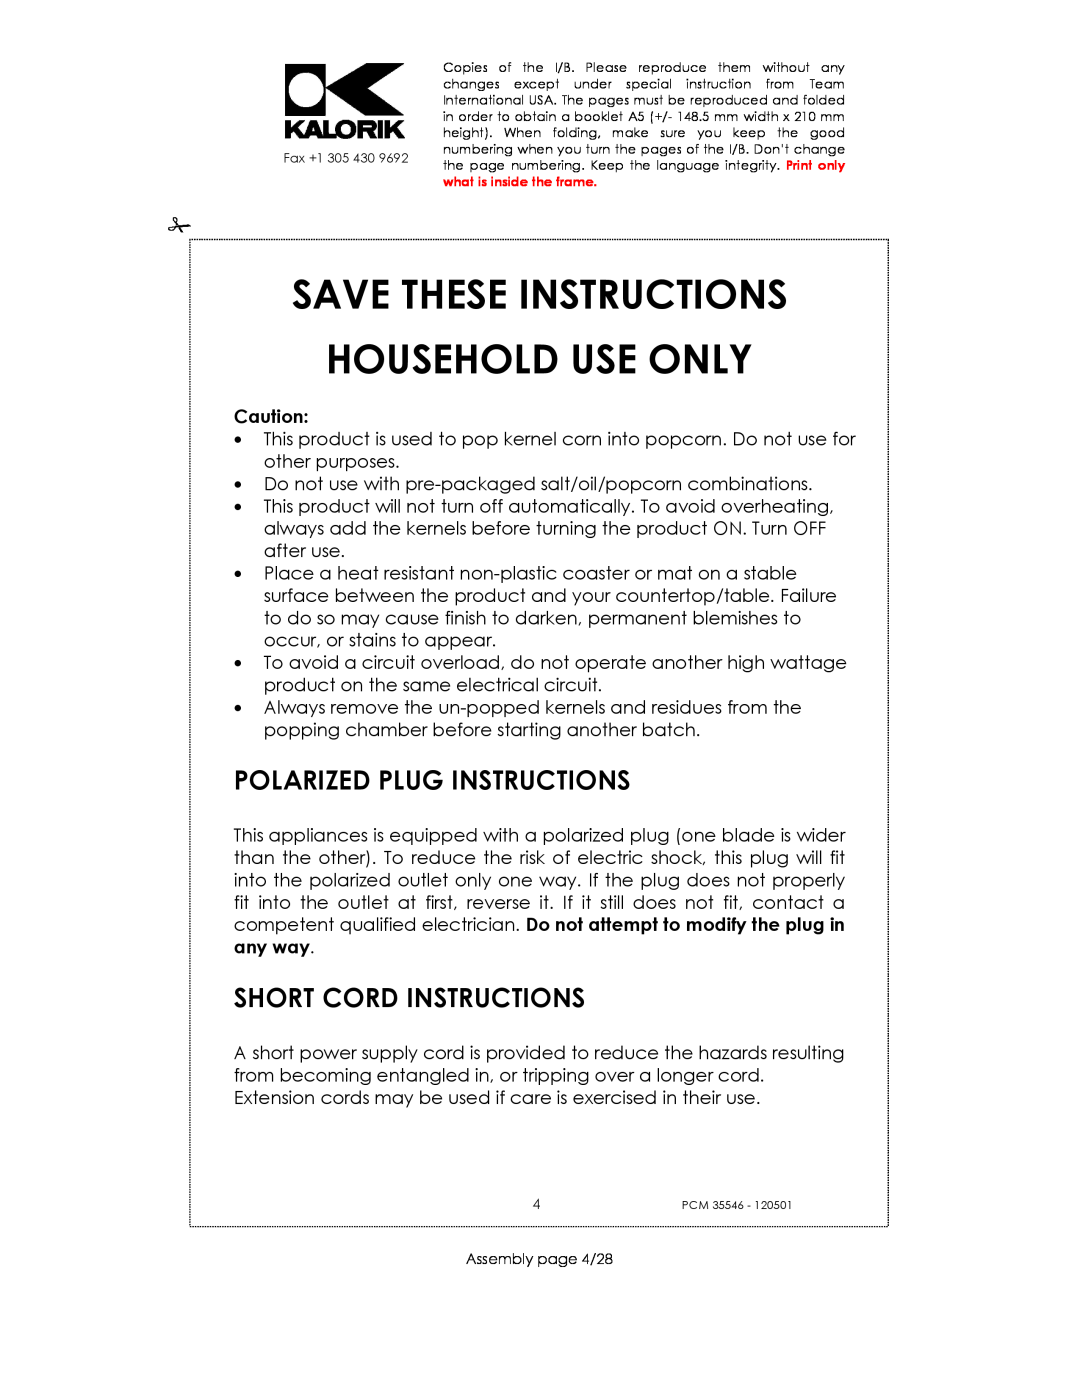 Kalorik PCM 35546 manual Save These Instructions Household Use Only, Polarized Plug Instructions, Short Cord Instructions 